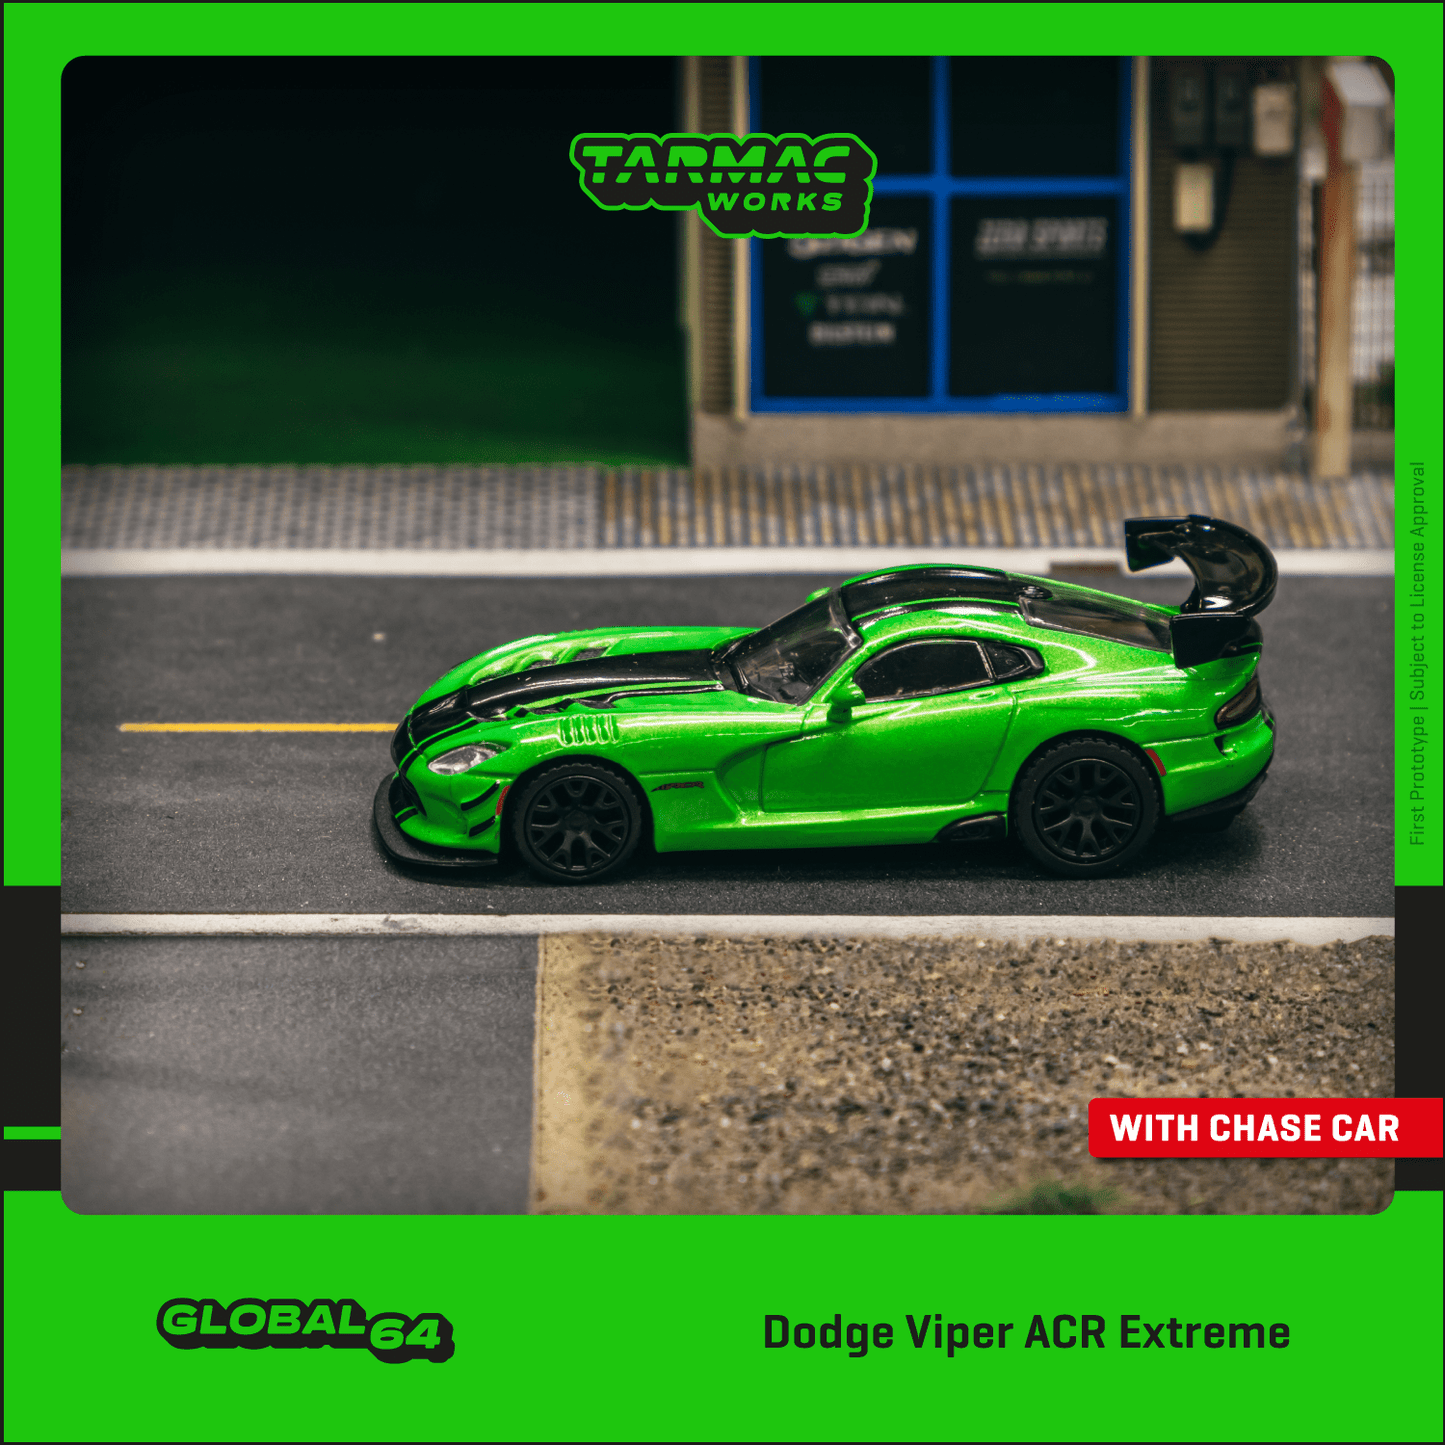 Tarmac works 1:64 Dodge Viper ACR Extreme Green Metallic